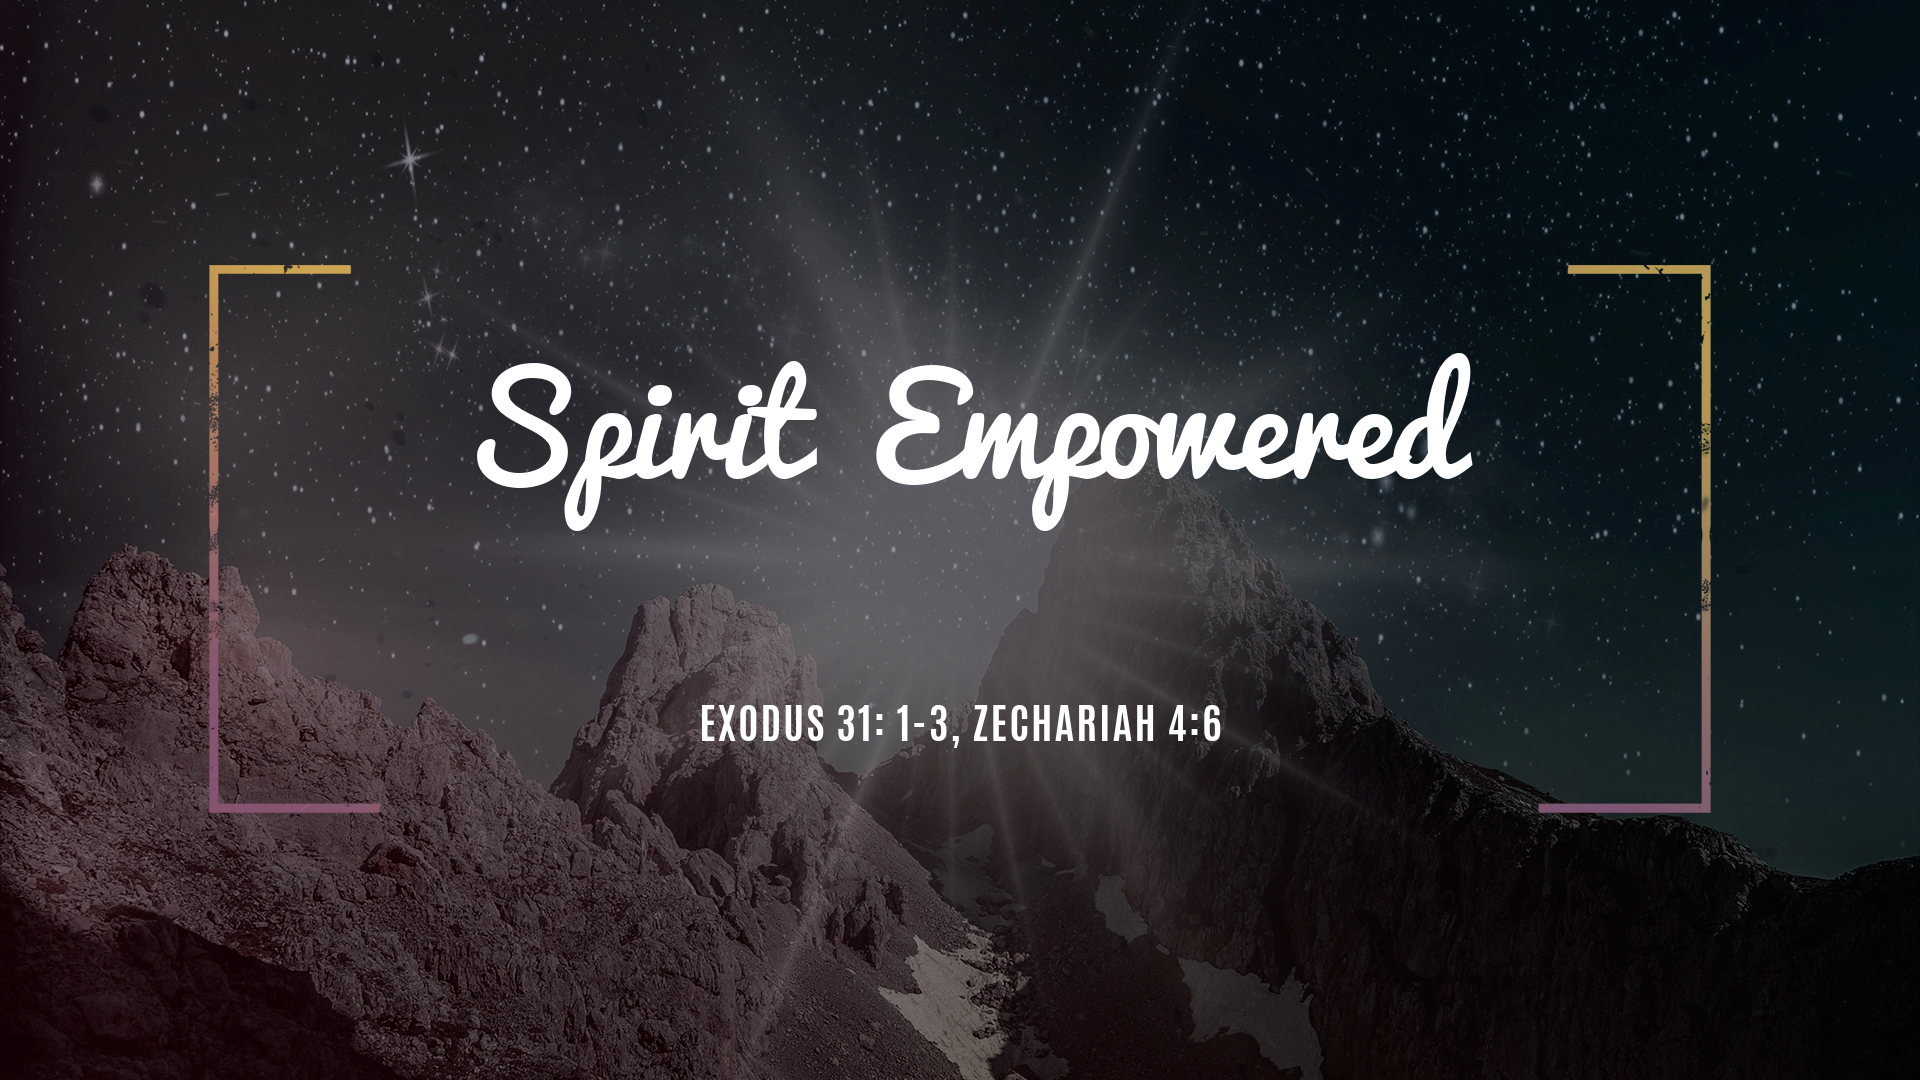 Jun 12, 2022 - Spirit Empowered (Video) Exodus 31: 1-3, Zechariah 4:6